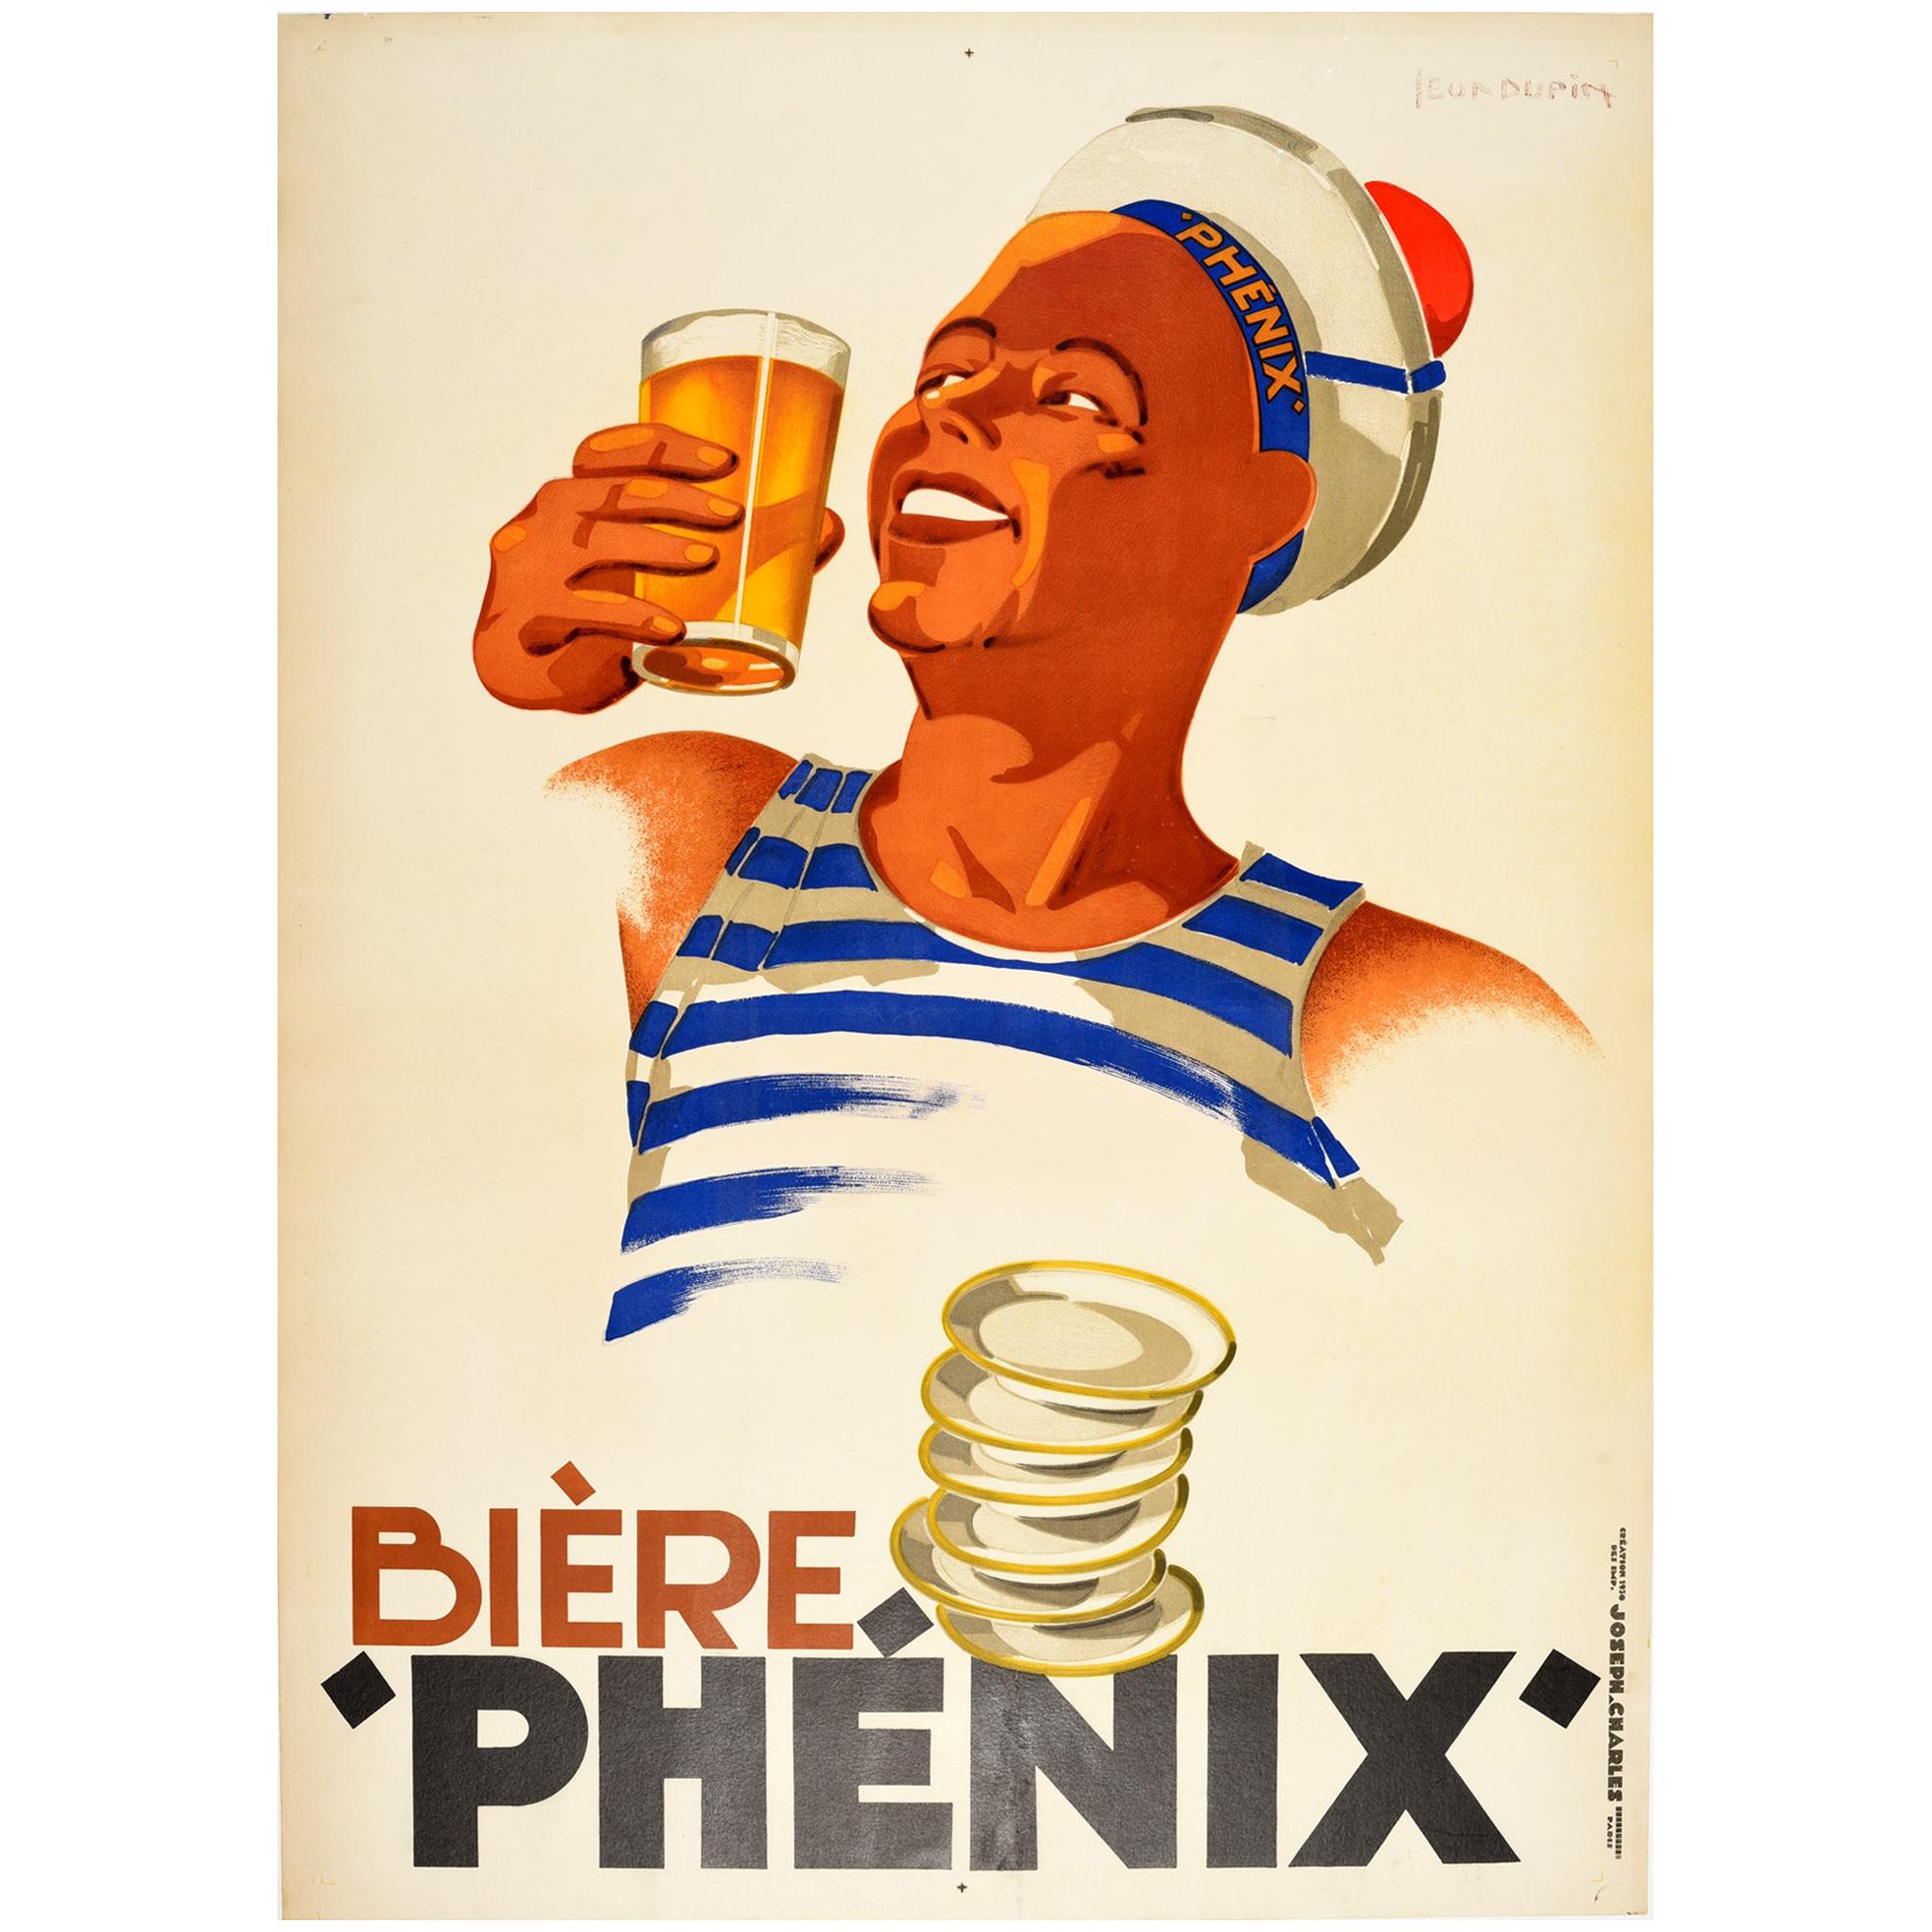 Original Vintage Poster Biere Phenix Beer Sailor Design Drink Advertising Art